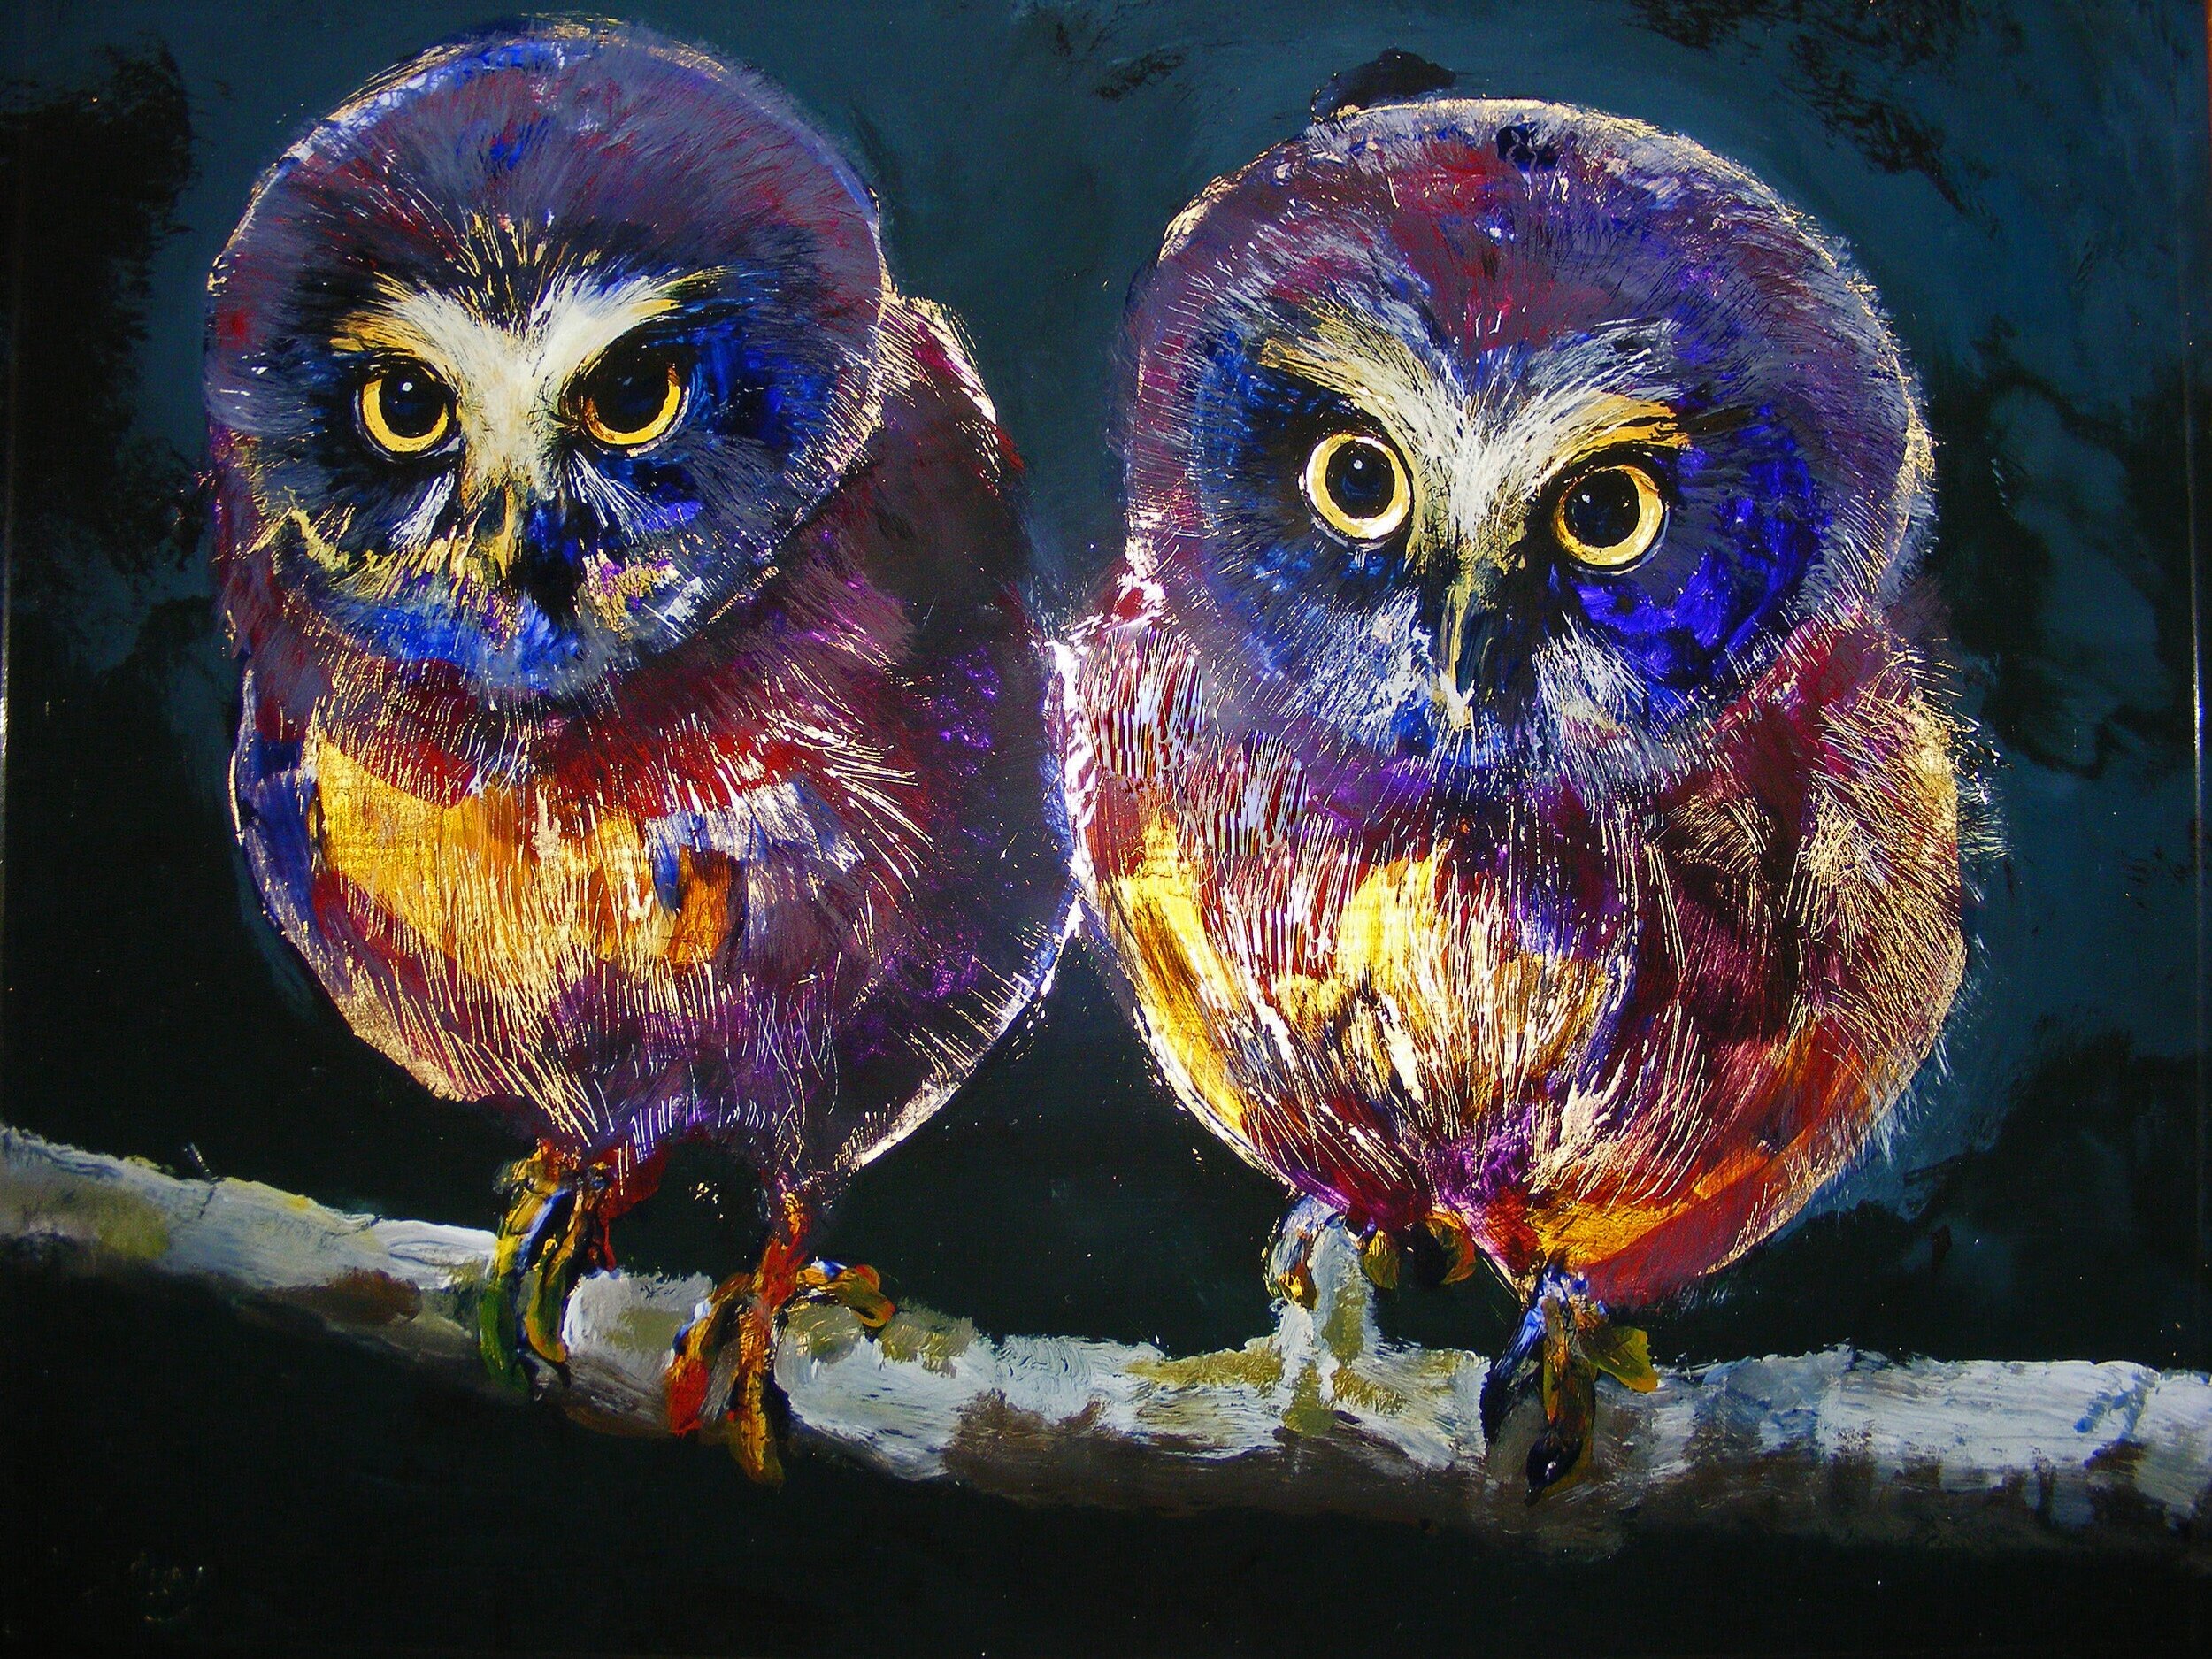 "Nightbirds (Woke Up Deafened)", copyright 2010 - A. Lindsey